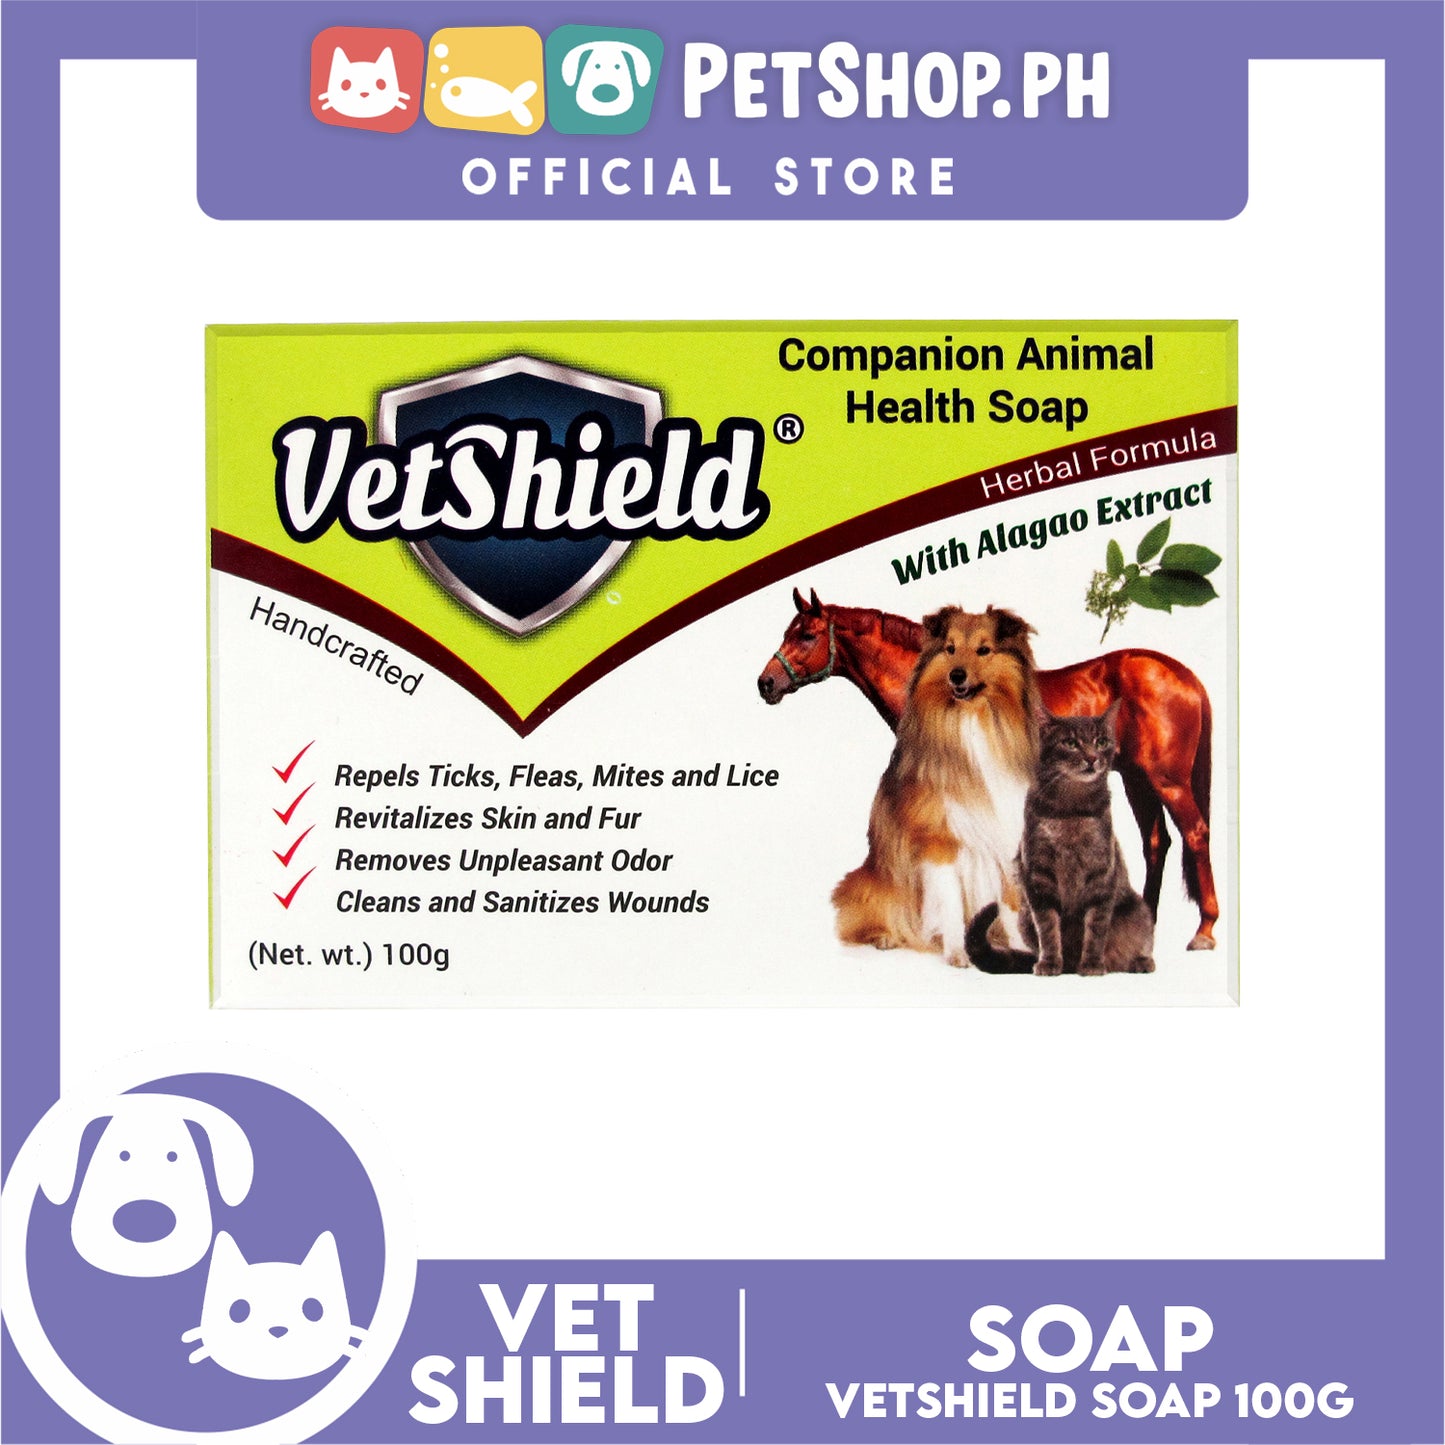 Vetshield Companion Animal Health Soap, Herbal Formula With Alaga Extract 100g Dog Soap